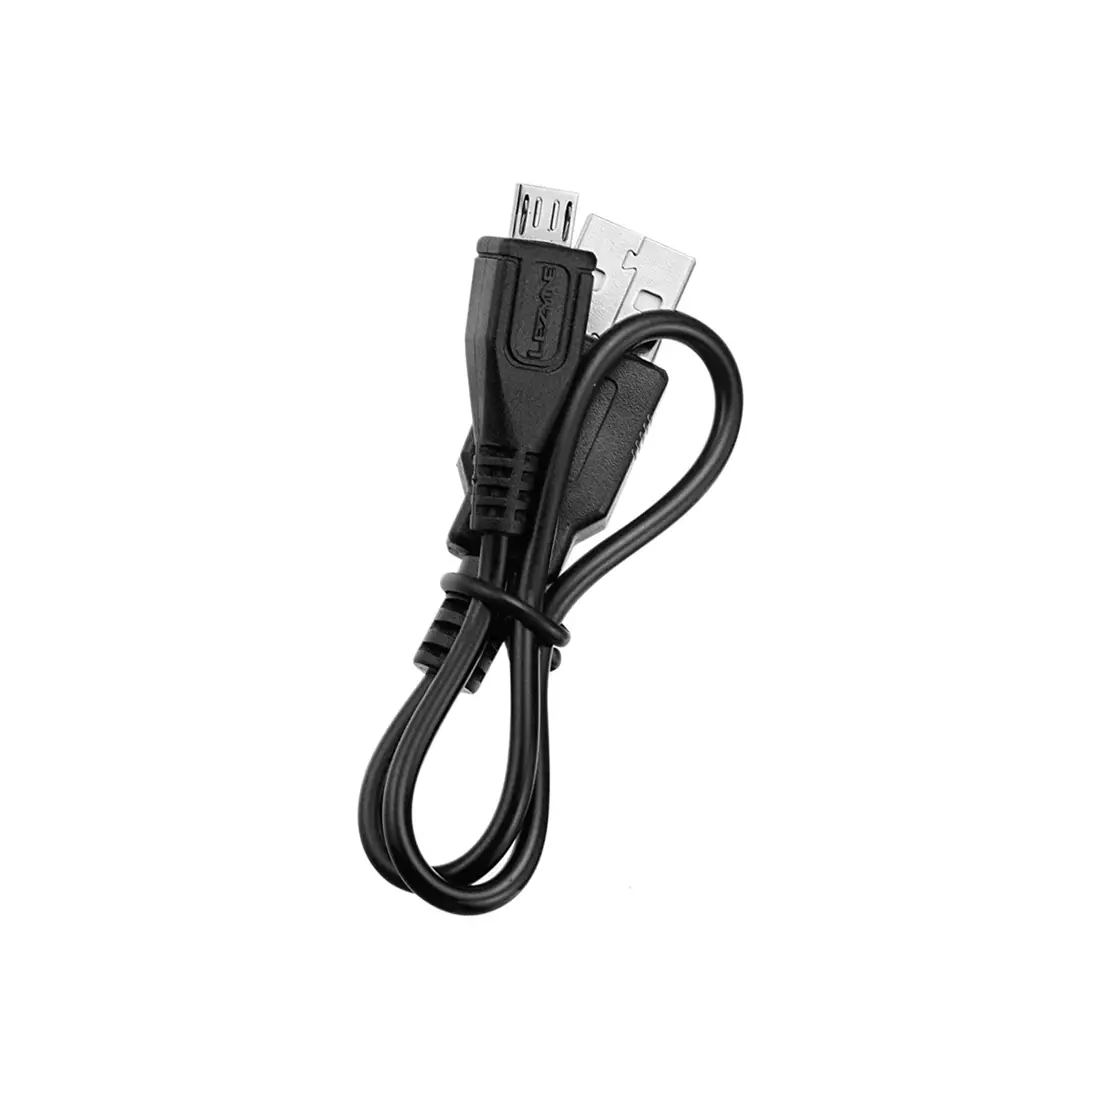 LEZYNE usb cable for lamp/gps device micro usb cable LZN-1-LED-USB-V204